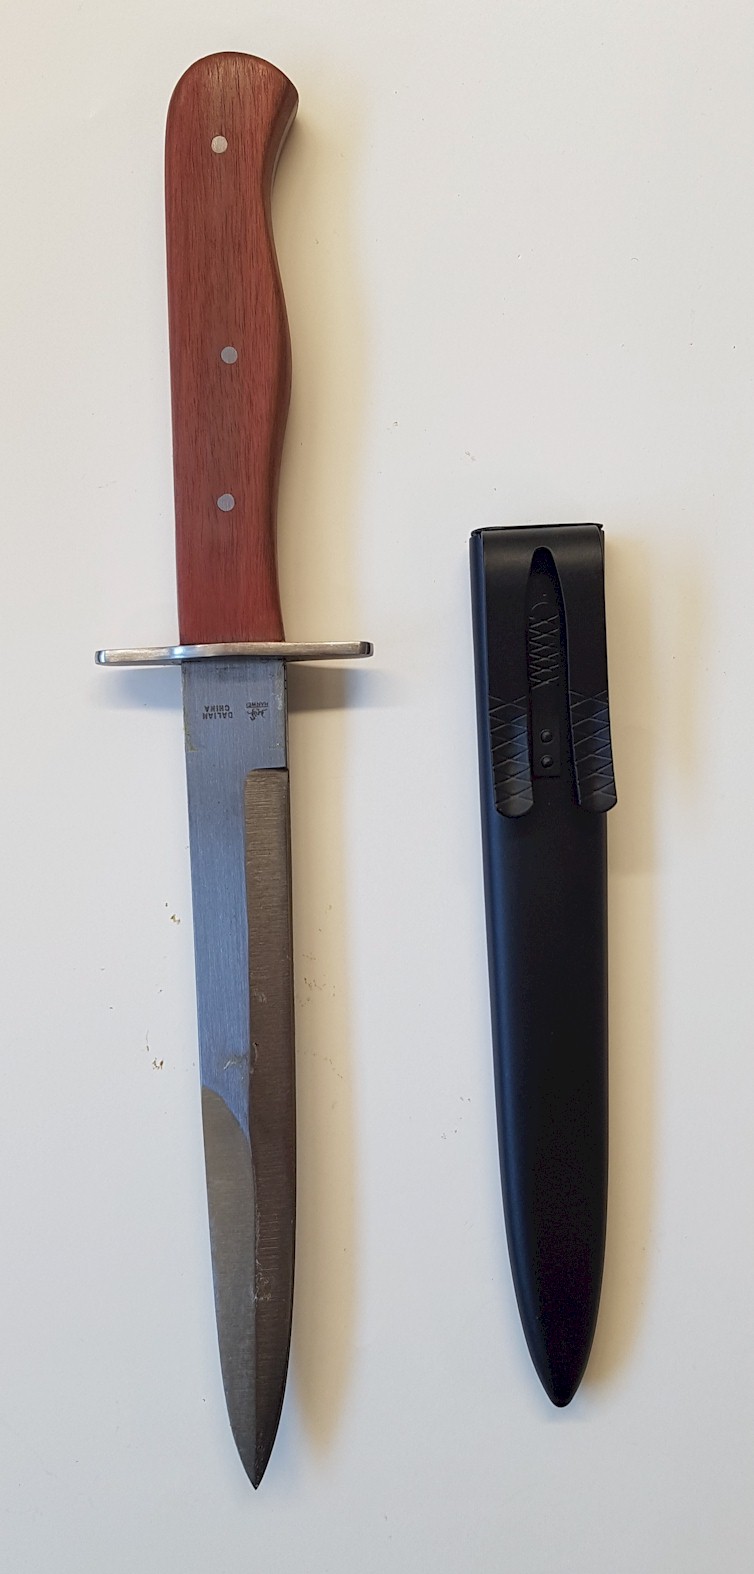 GERMAN TRENCH KNIFE - LONG GUARD